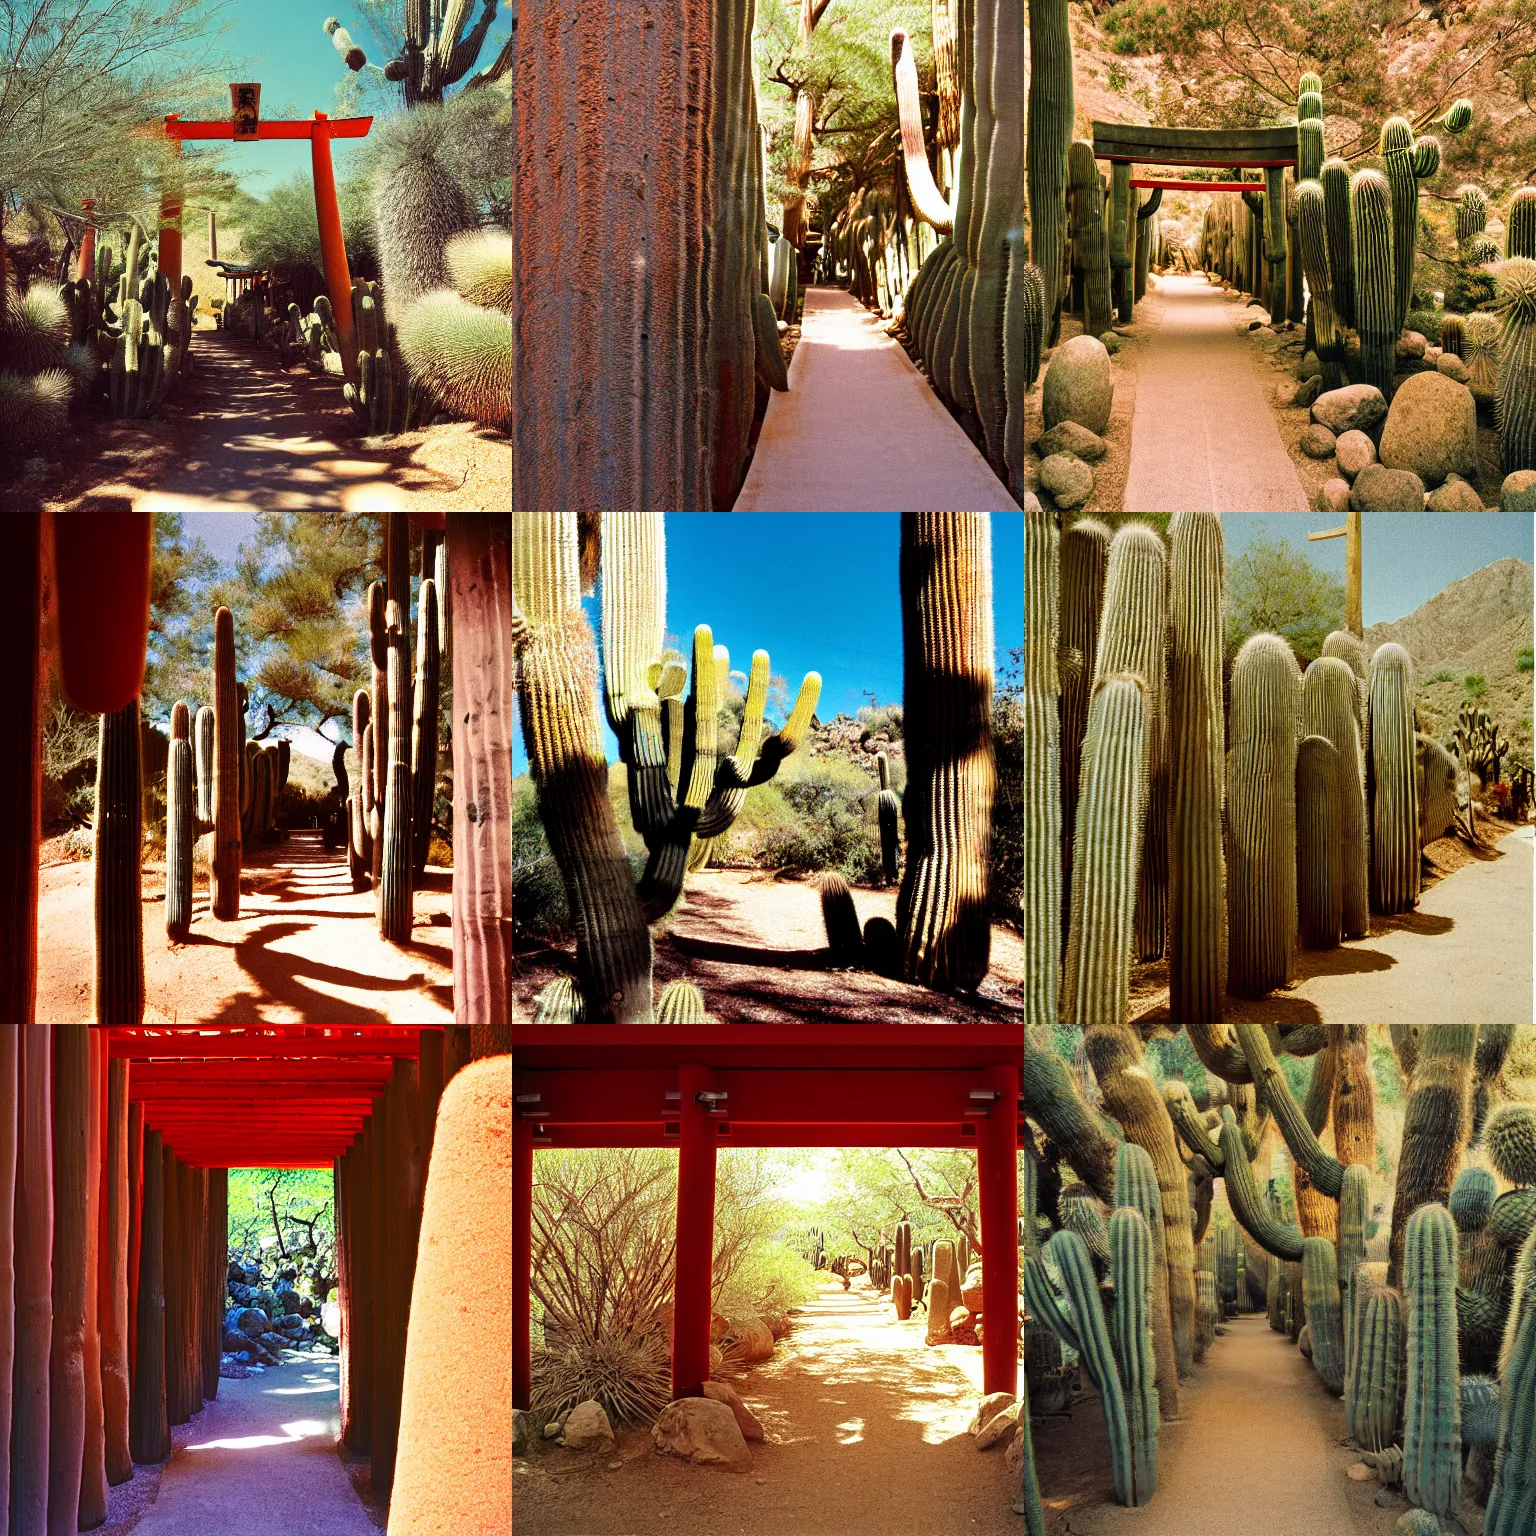 Prompt: kasuga taisha shrine torii alley in the desert southwest, small saguaro cactus visible, late morning, kodak gold 200, film grain, perspective correction, depth of field